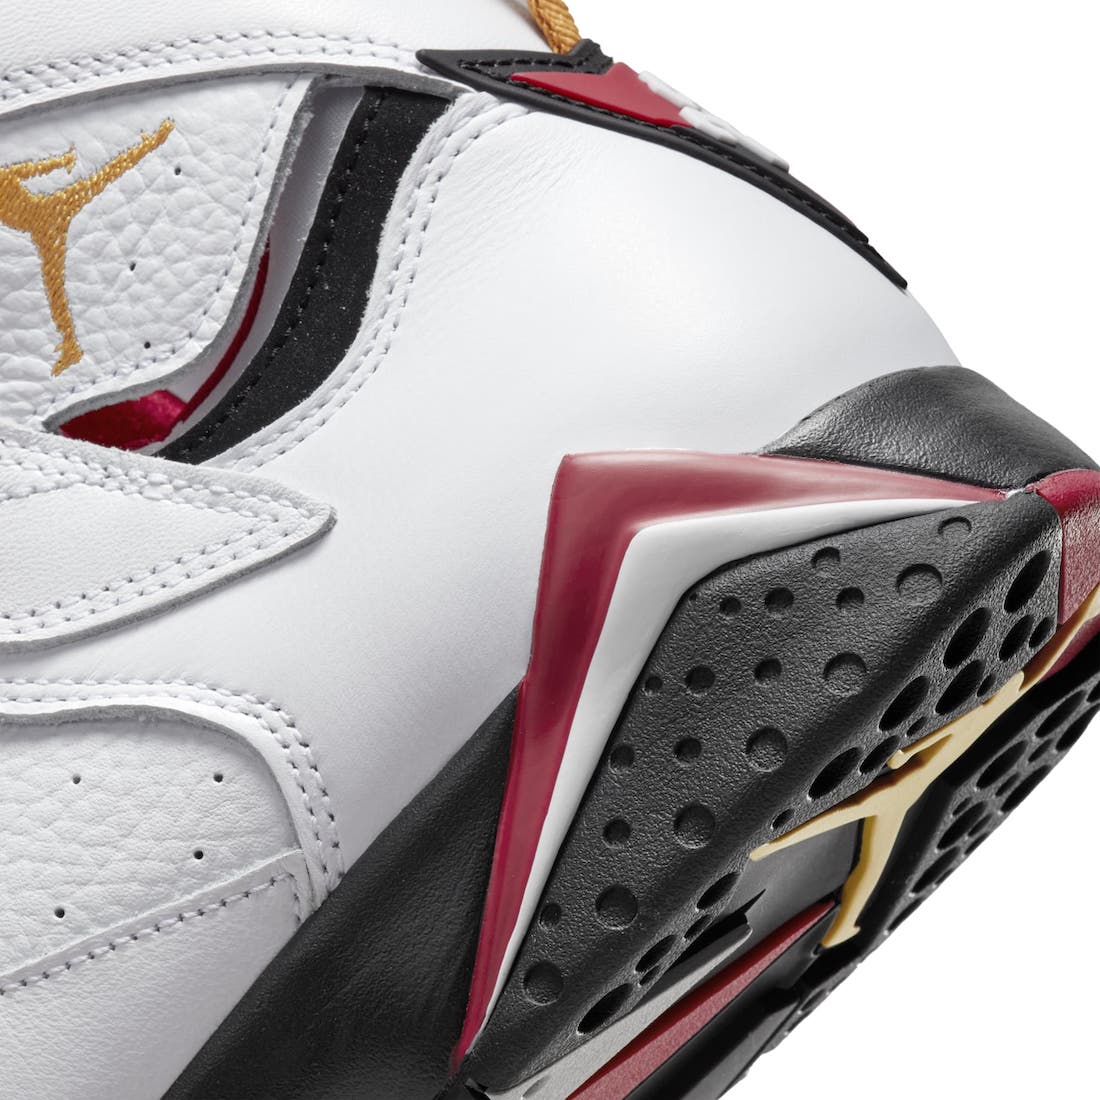 Official Look At The Air Jordan 7 Retro “Cardinal”